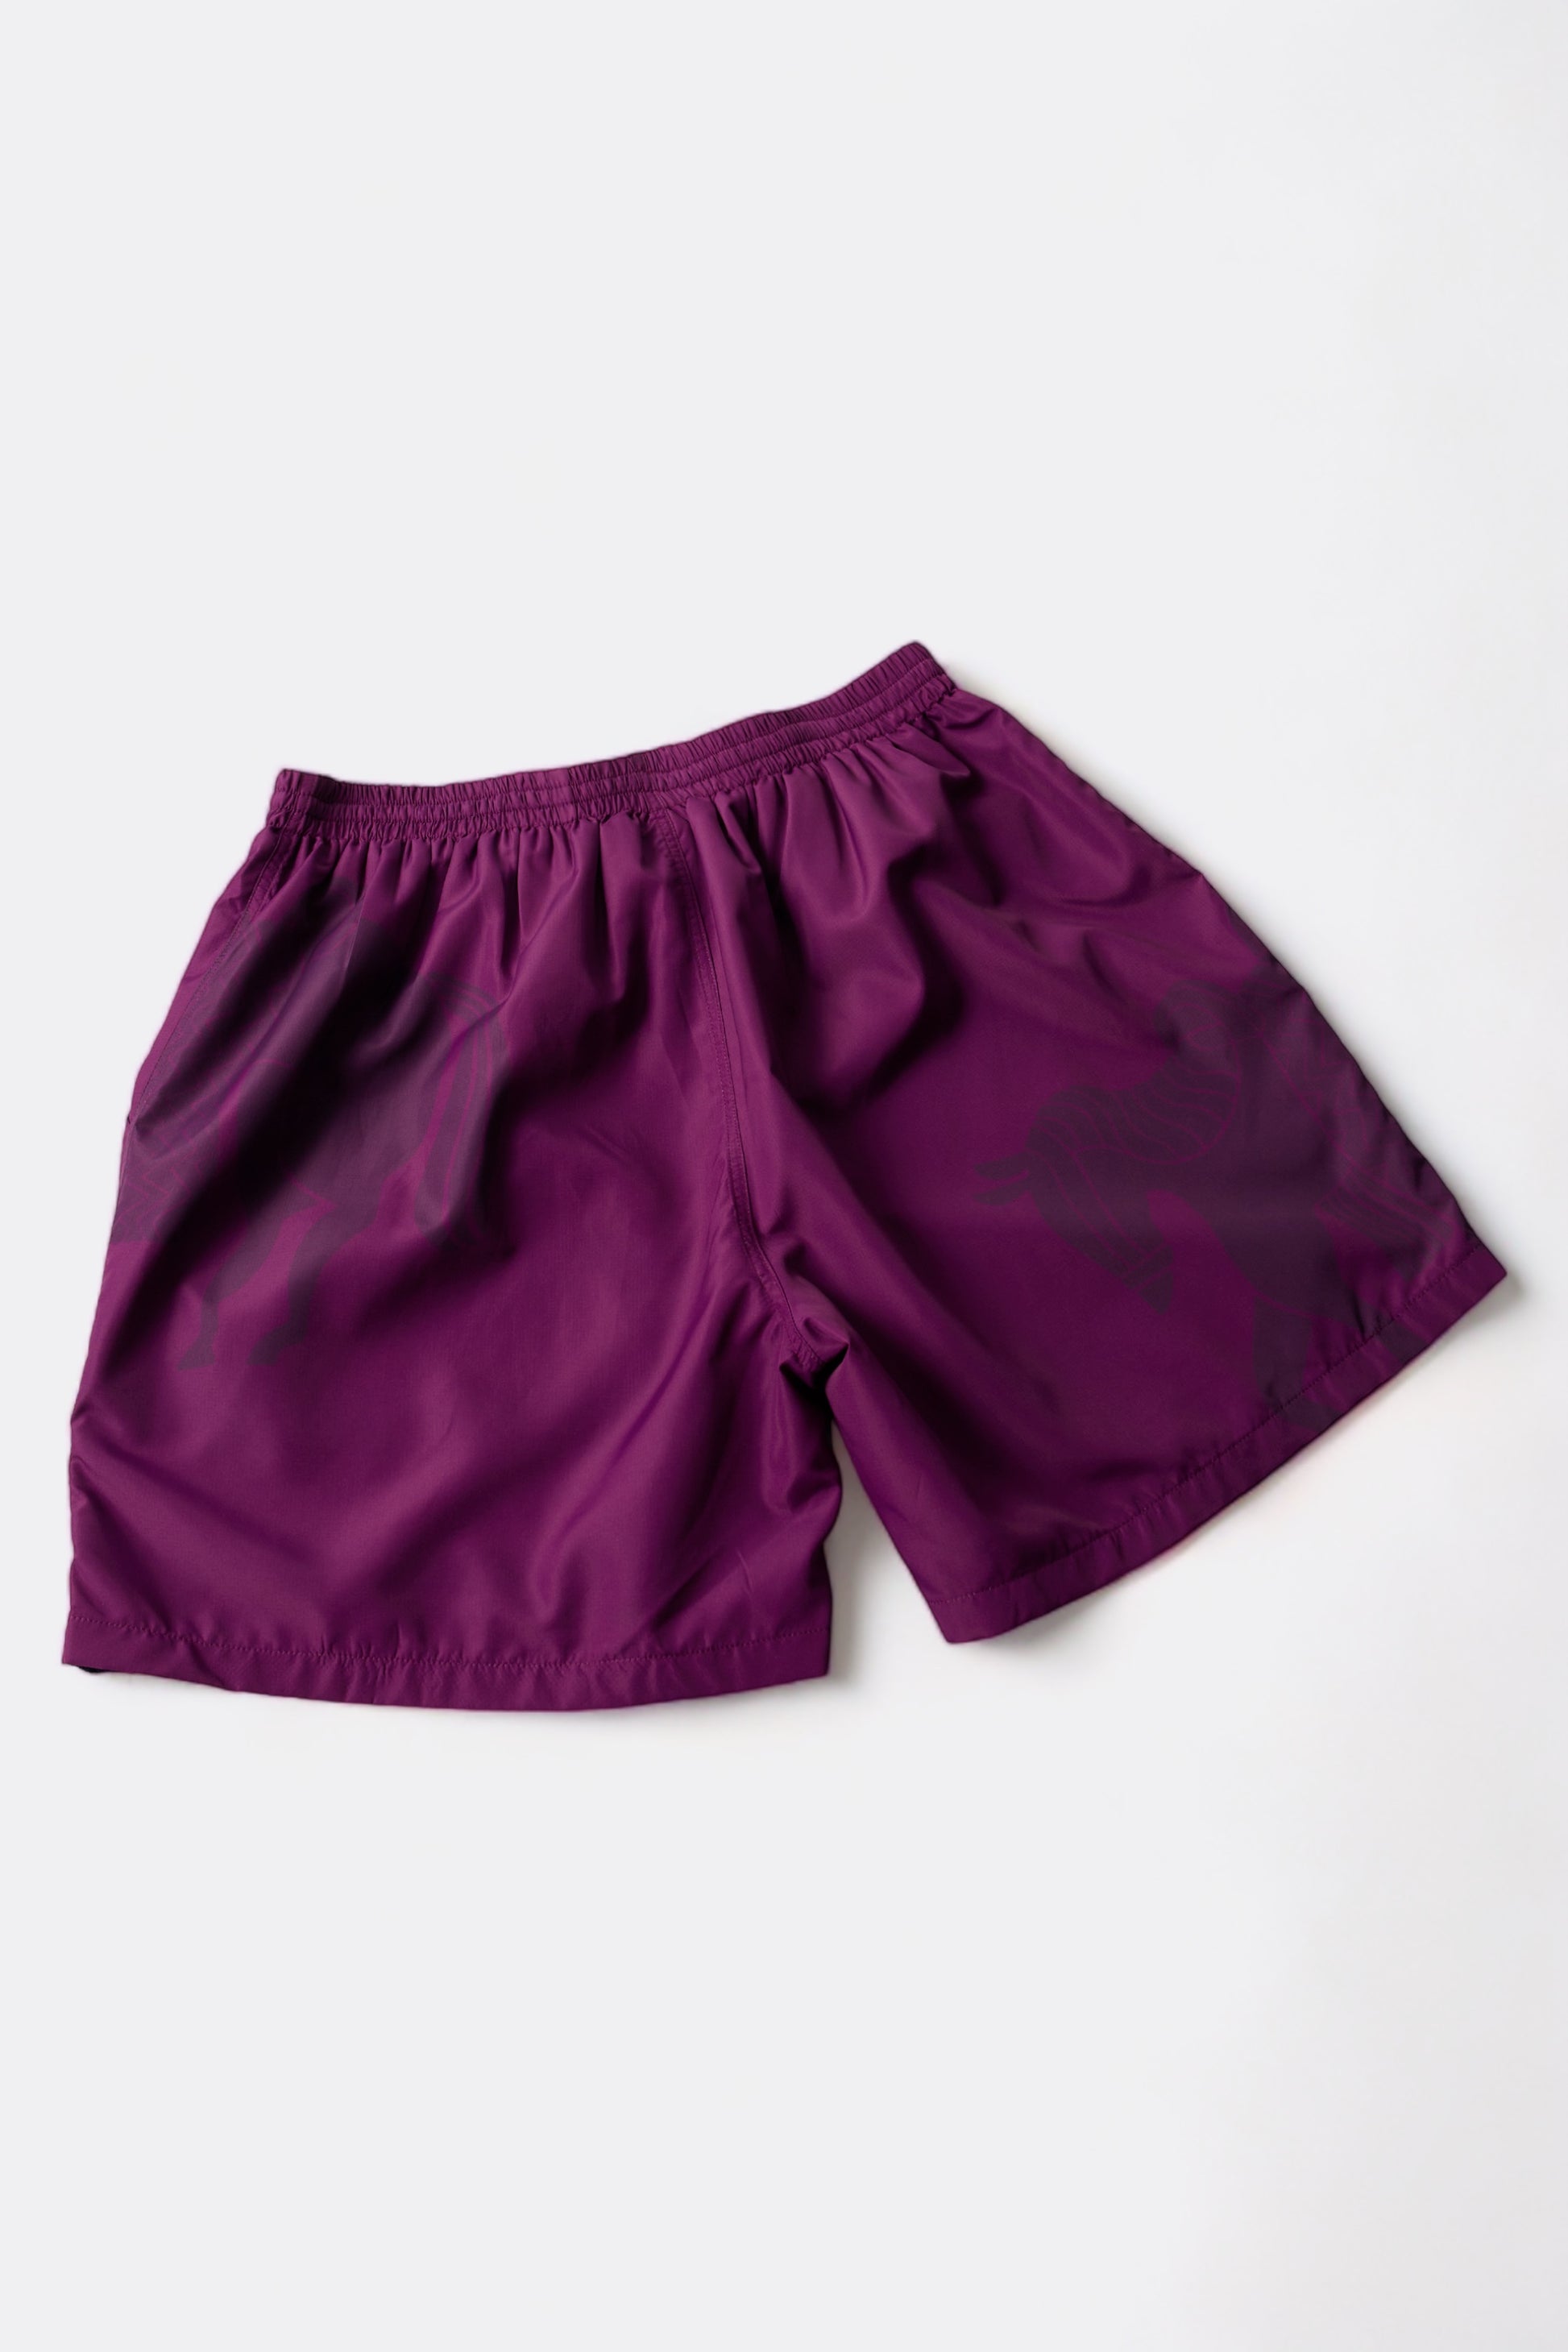 Parra - Short Horse Shorts (Tyrian Purple)